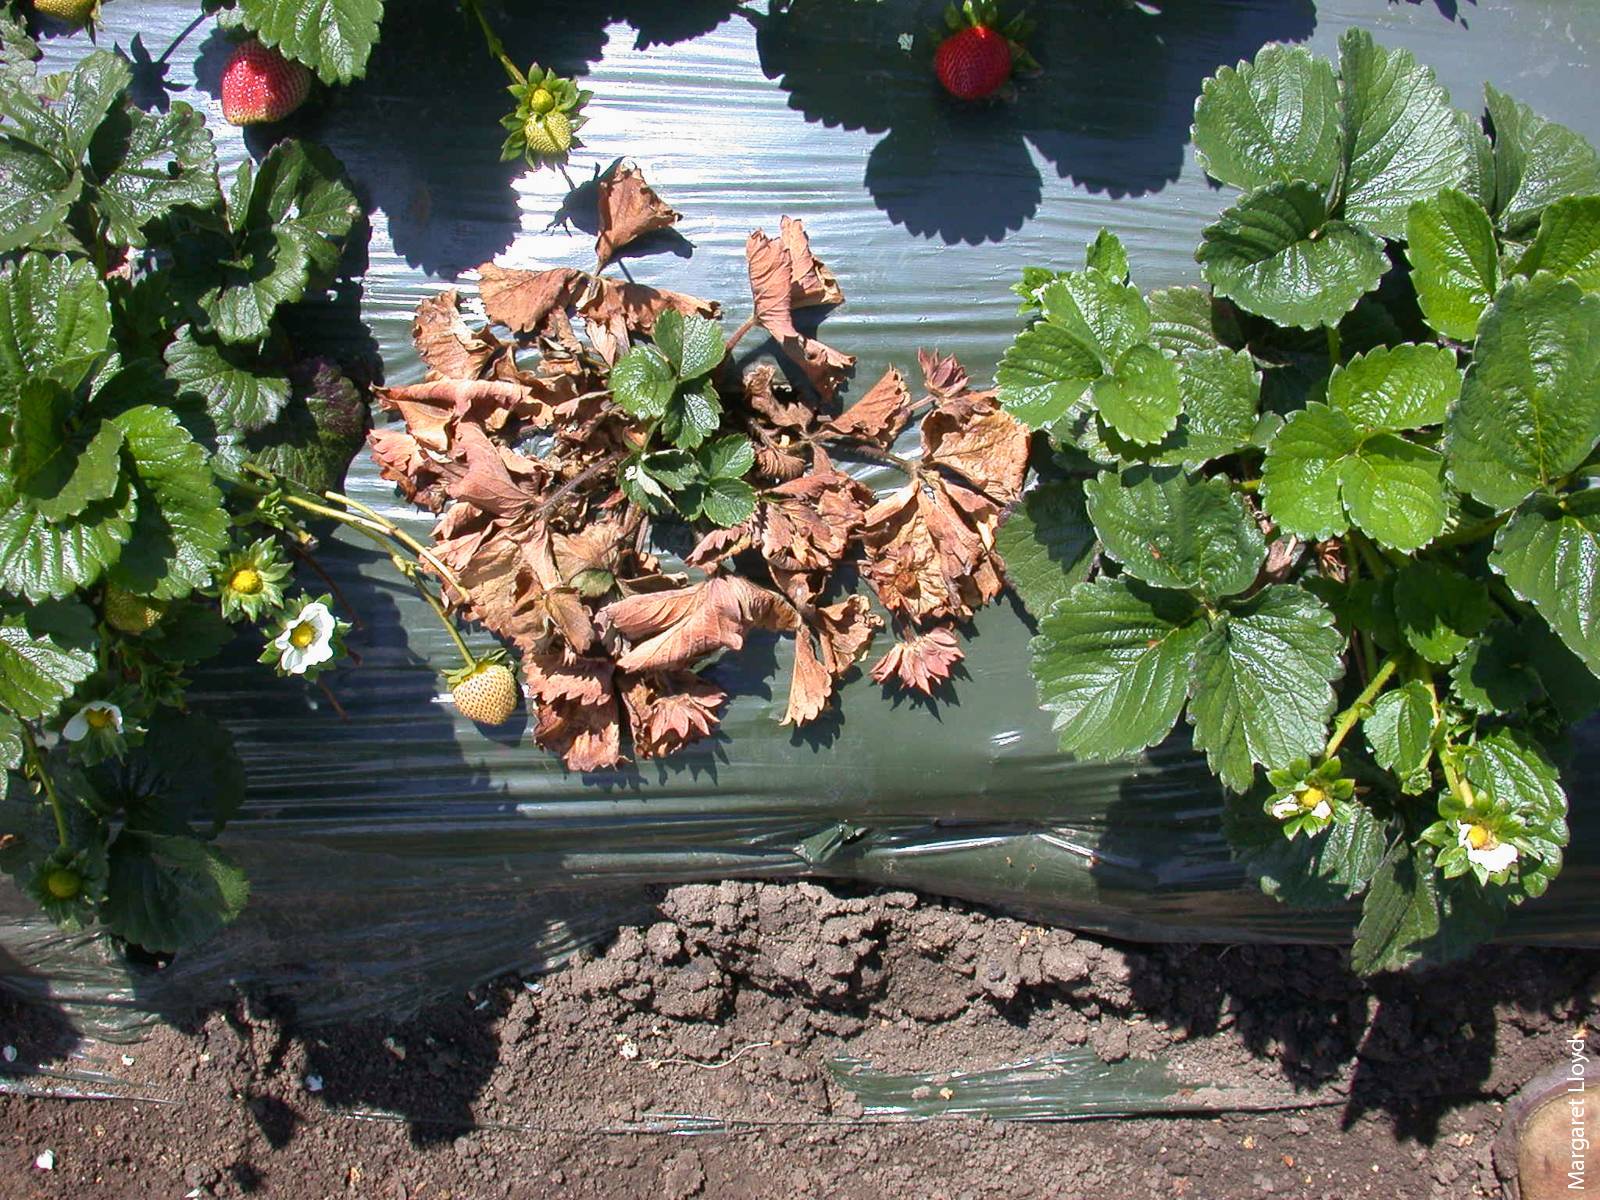 A strawberry plant affected by Vertcillium wilt.